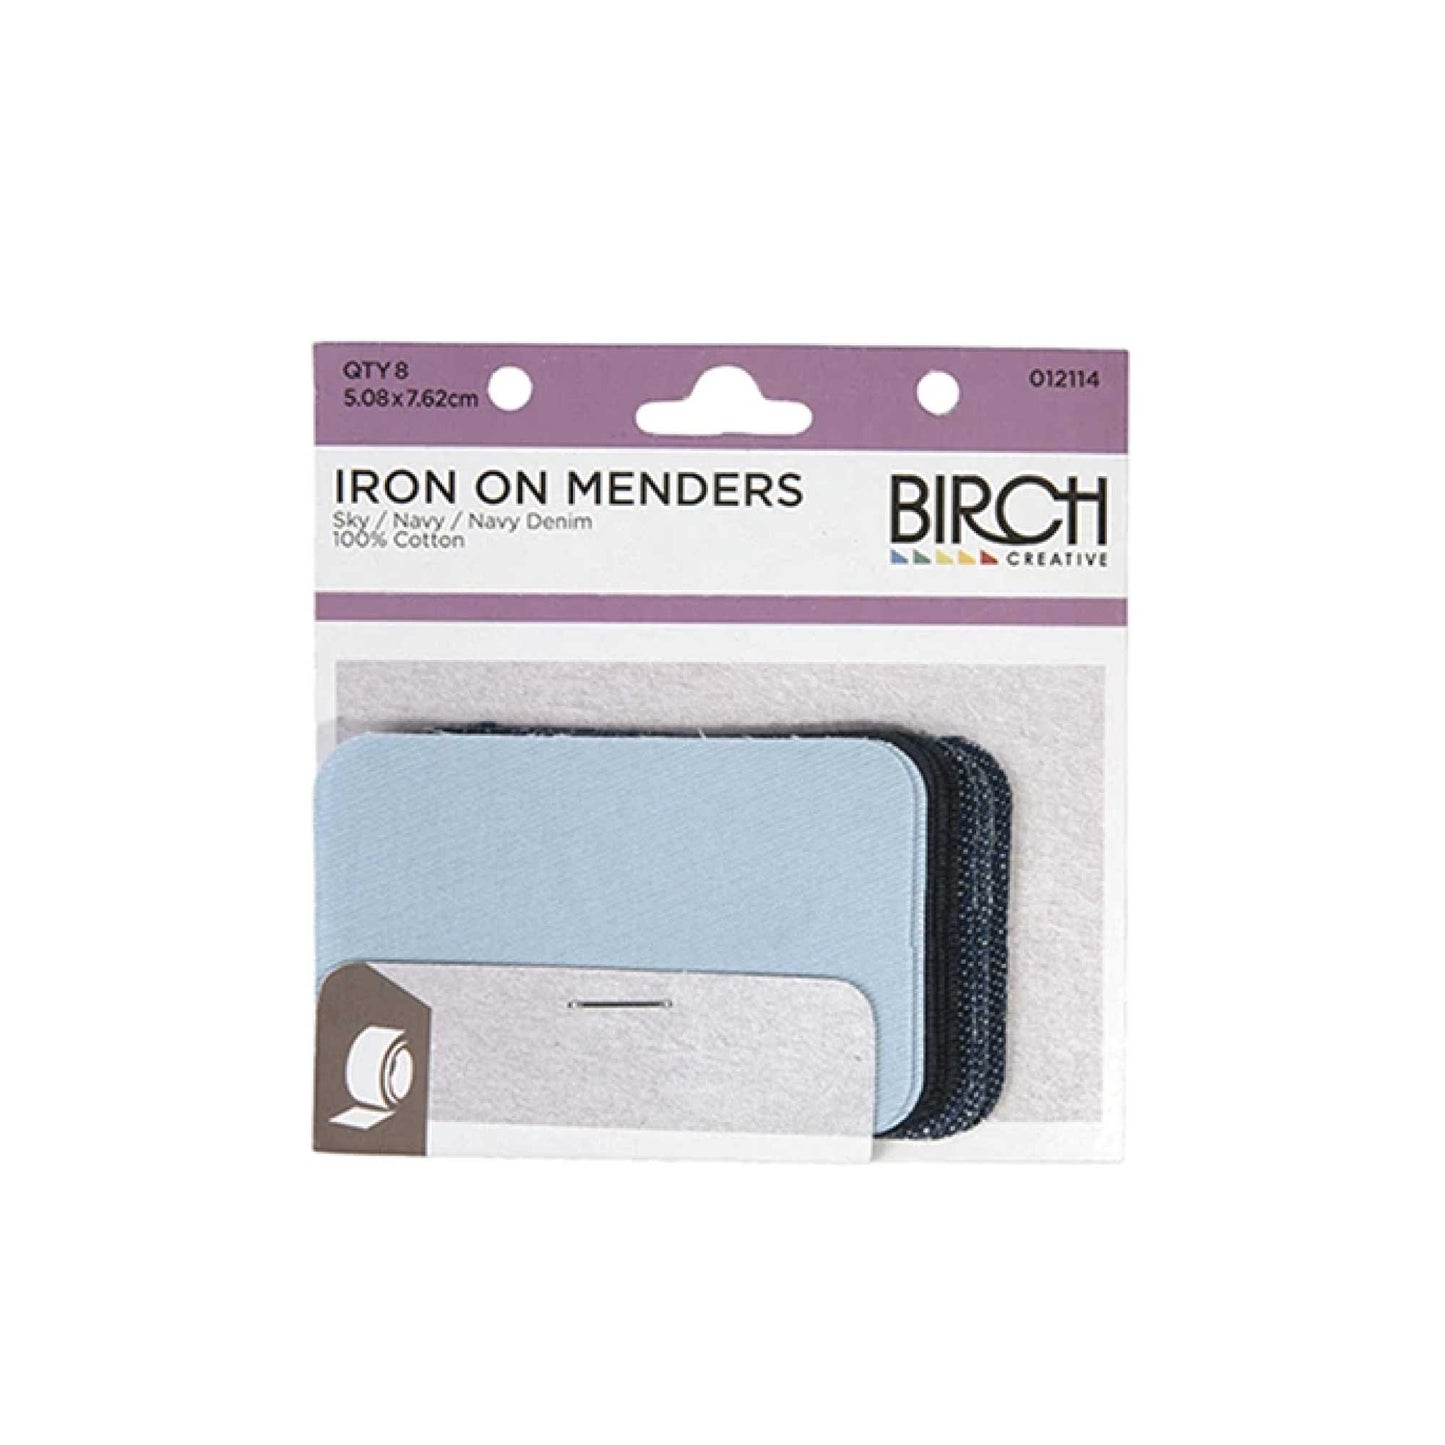 8 Pck Iron On Menders 5.08x7.62cm Cotton Clothes Mending Repair Patches Birch